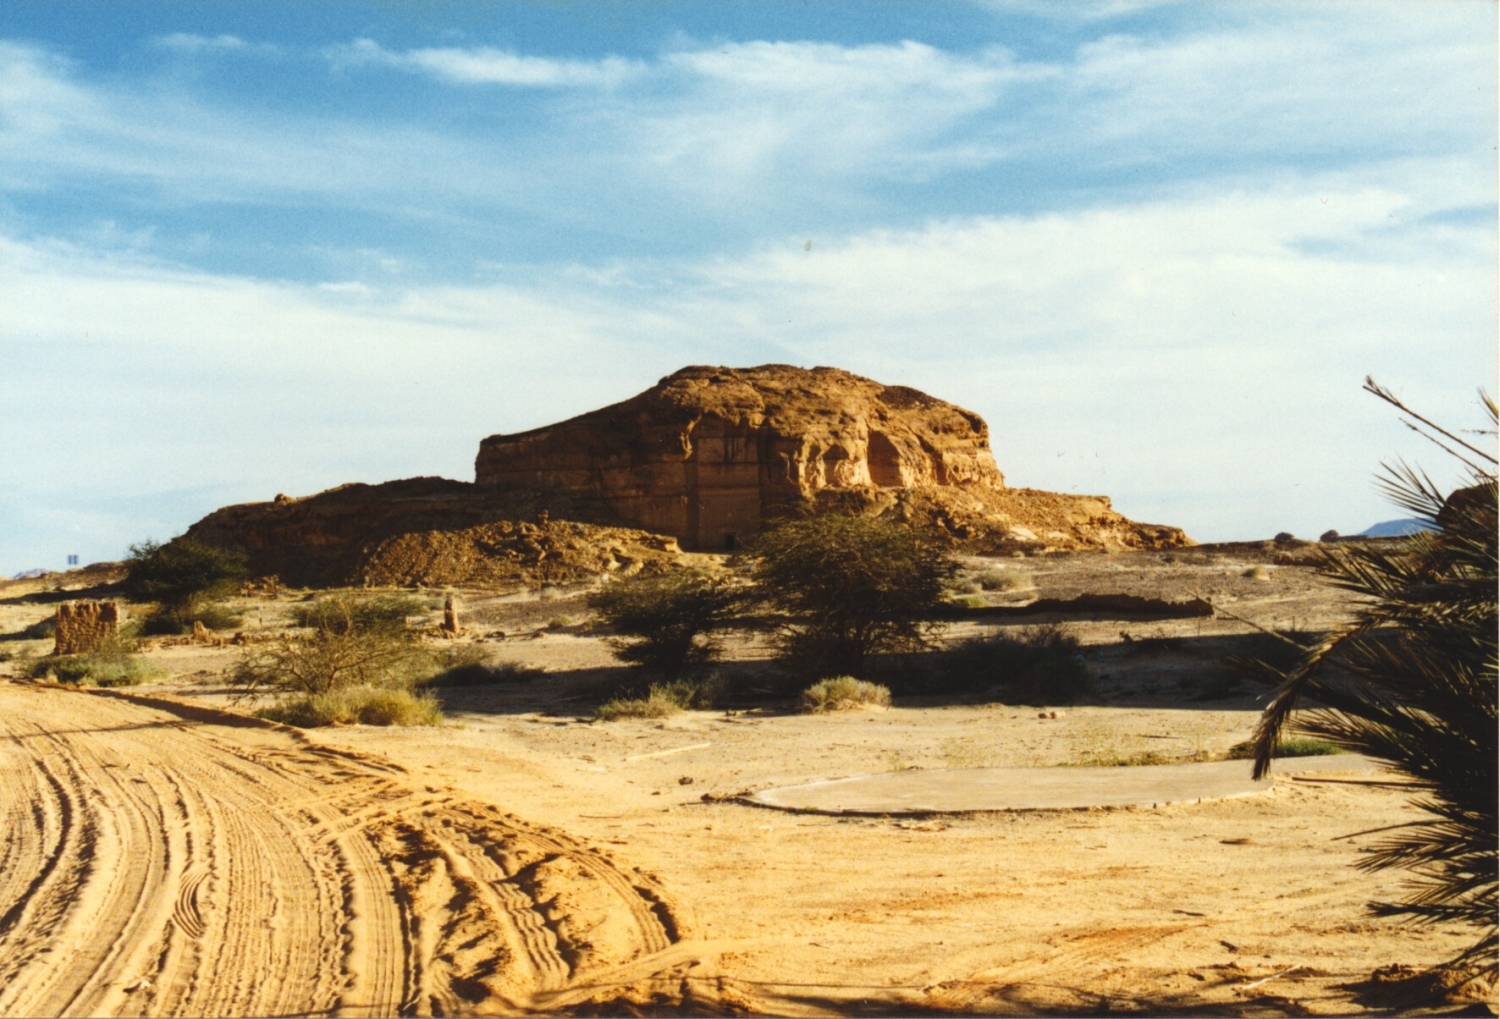 General view of the Qasr Al-Sanie